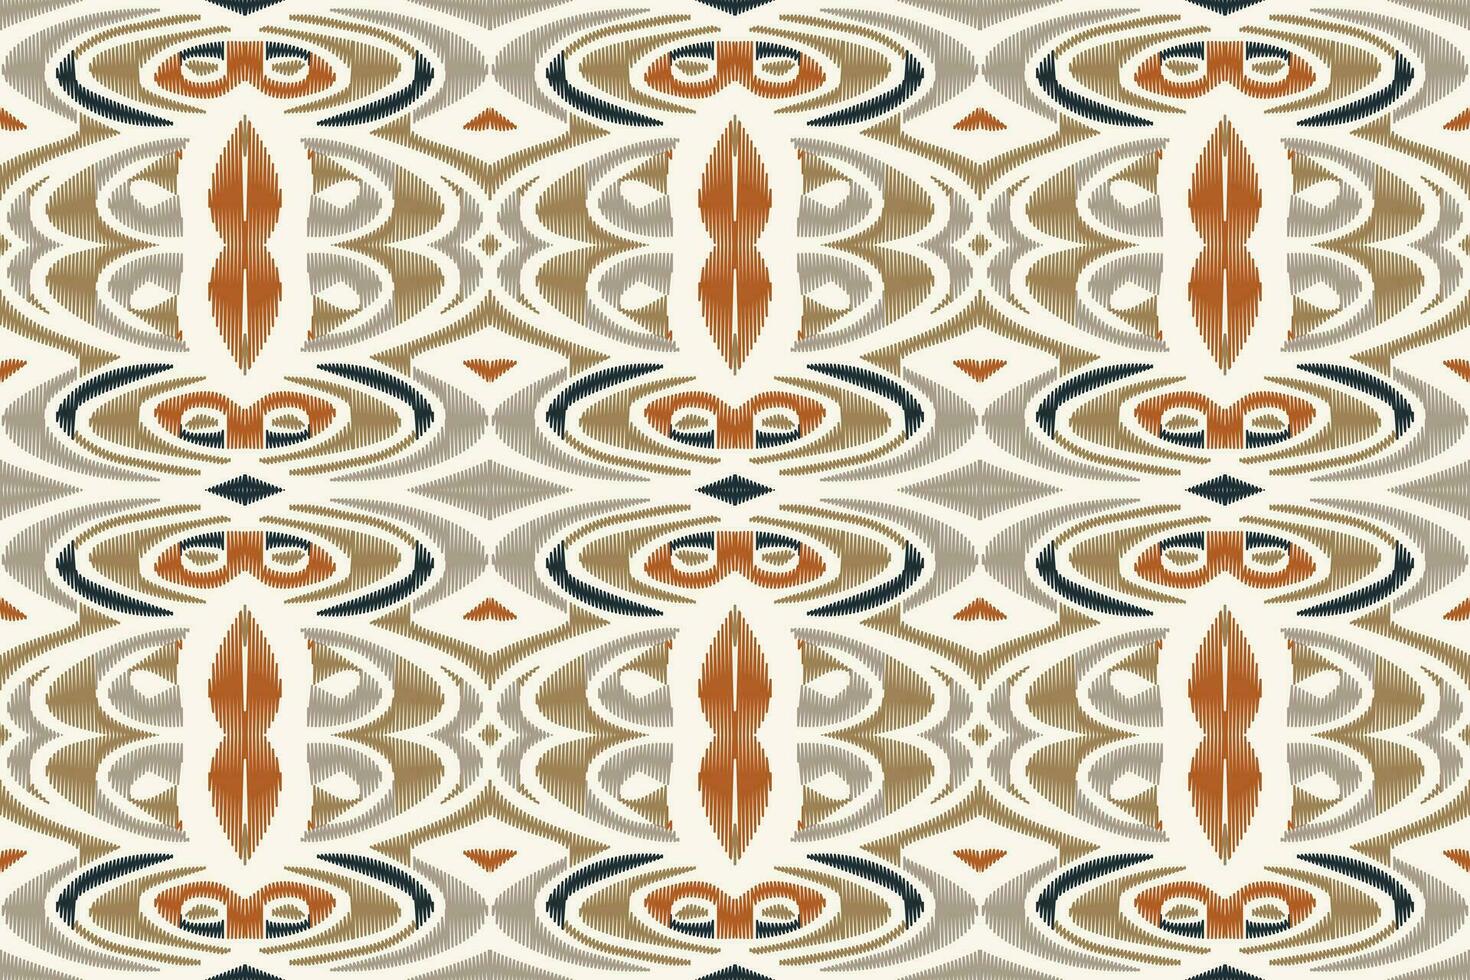 ikat blommig paisley broderi bakgrund. ikat design geometrisk etnisk orientalisk mönster traditionell.aztec stil abstrakt vektor illustration.design för textur, tyg, kläder, inslagning, sarong.